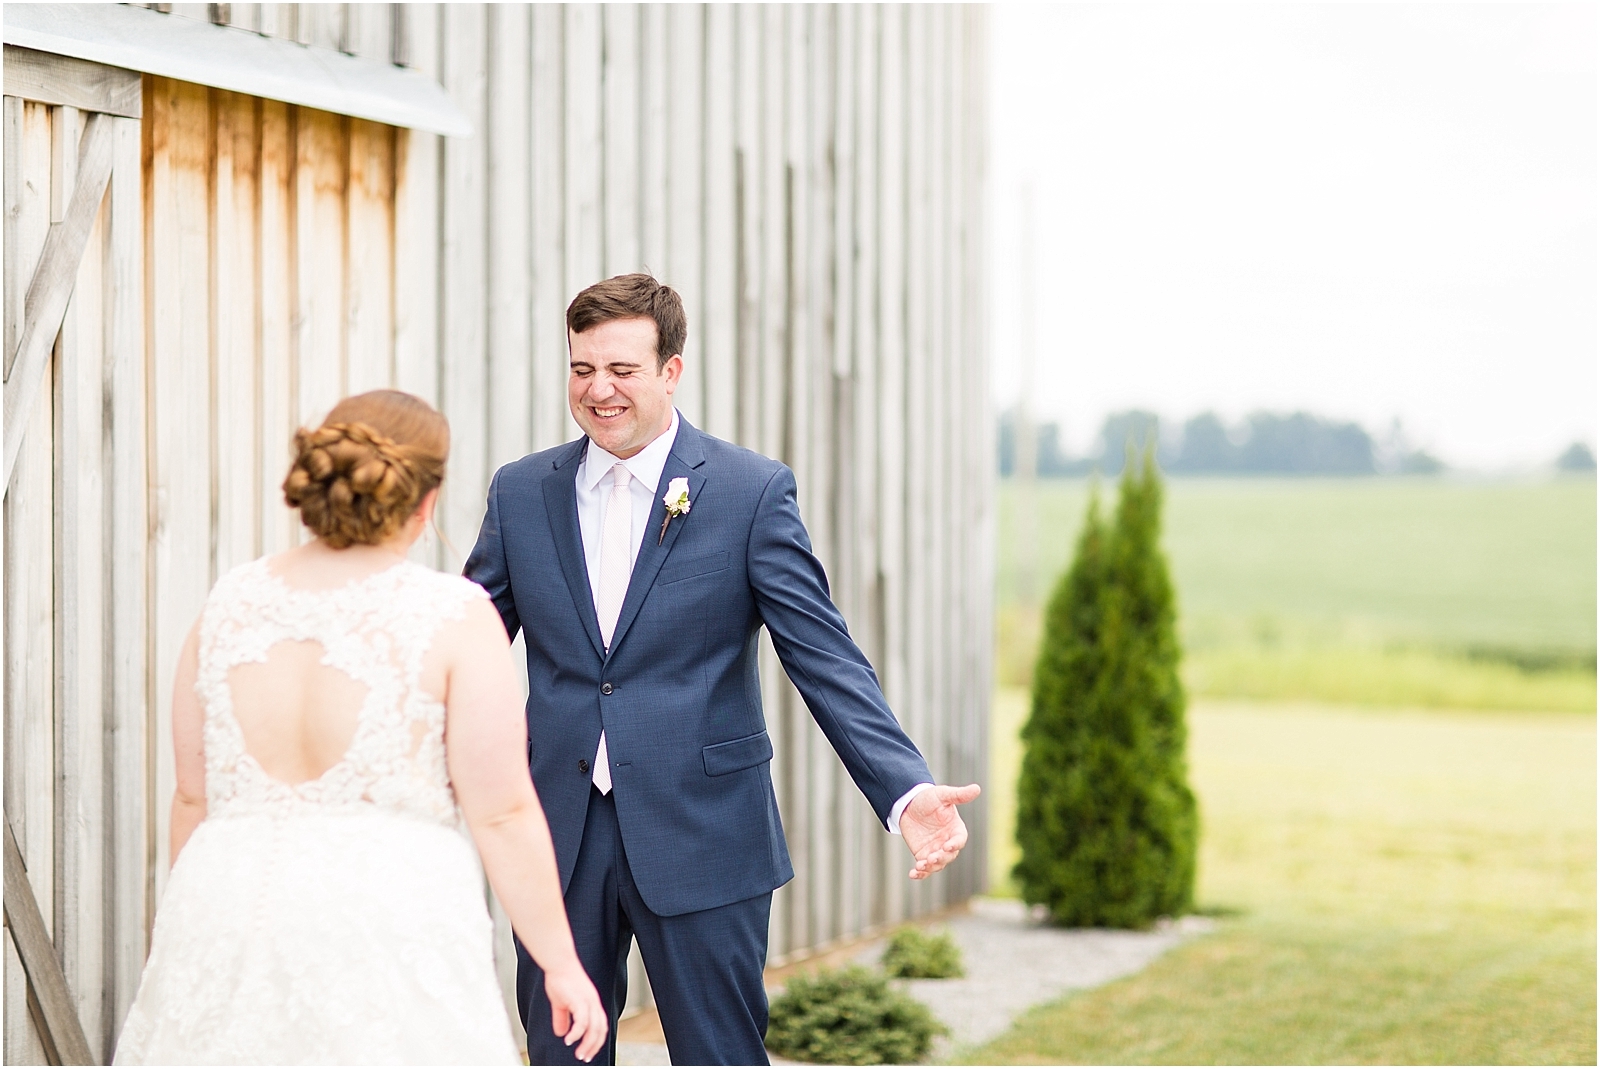 Rachel and Michael | Bret and Brandie Photography | Evansville Wedding Photographers 0031.jpg